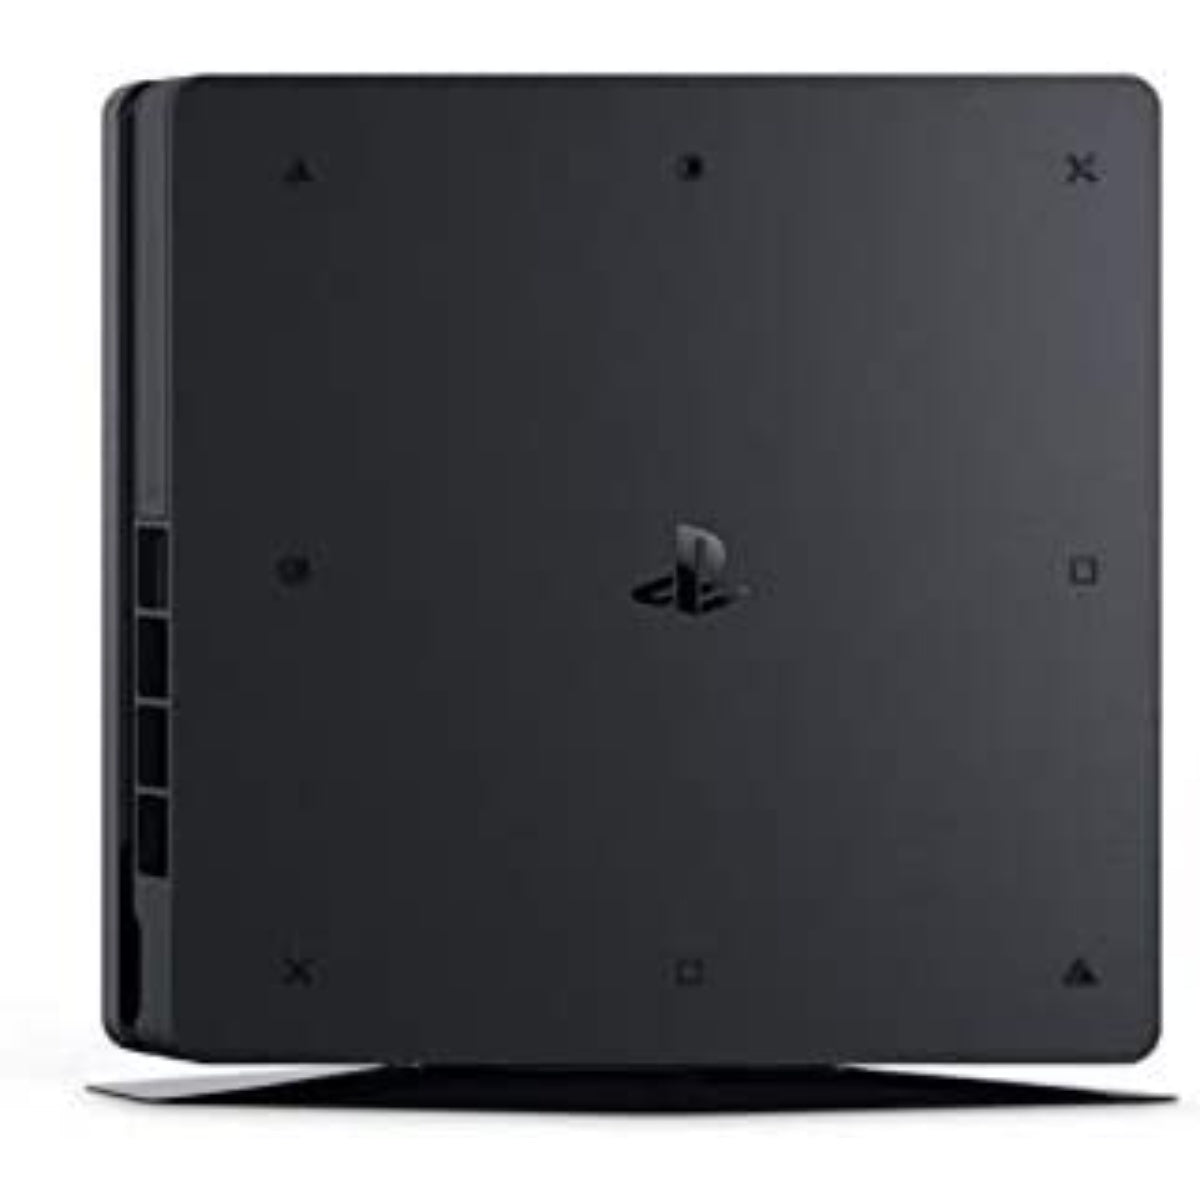 Sony PlayStation - PS4 1TB Slim Console (Black) - International Version